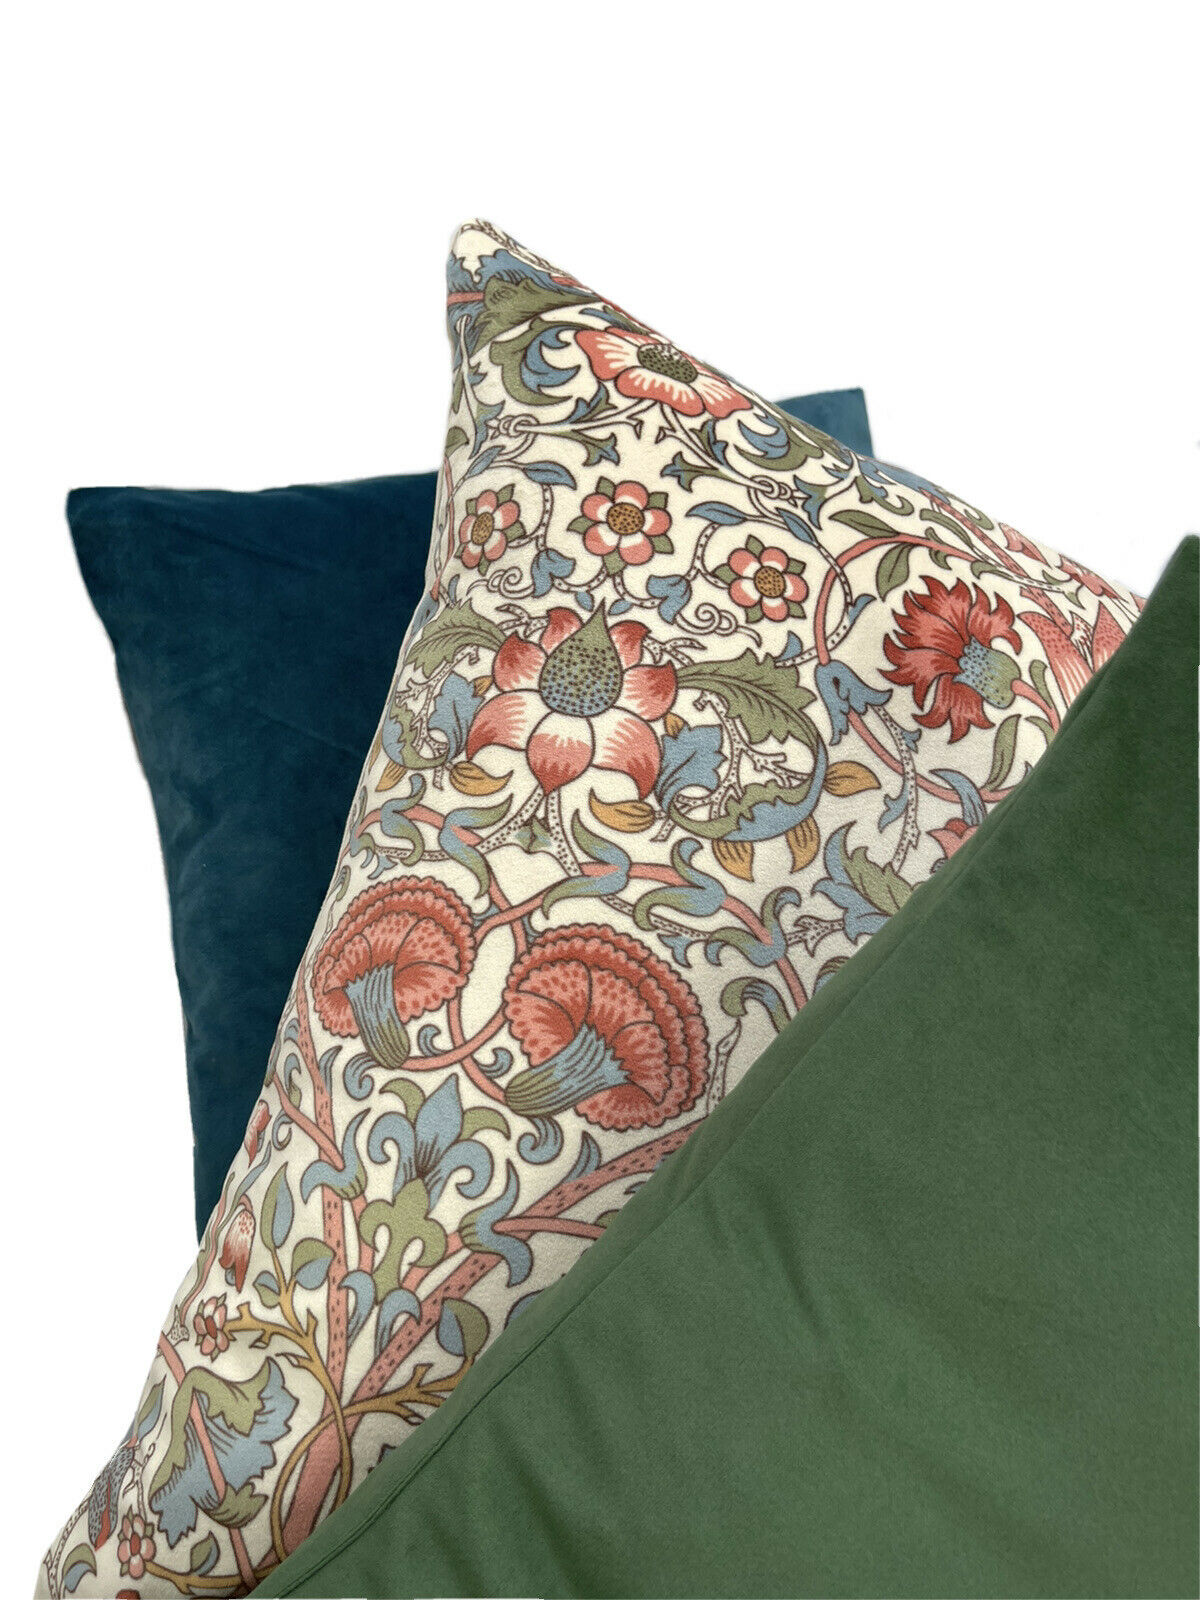 William Morris Cushion Cover Lodden Velvet Fabric Vintage Sofa Decor